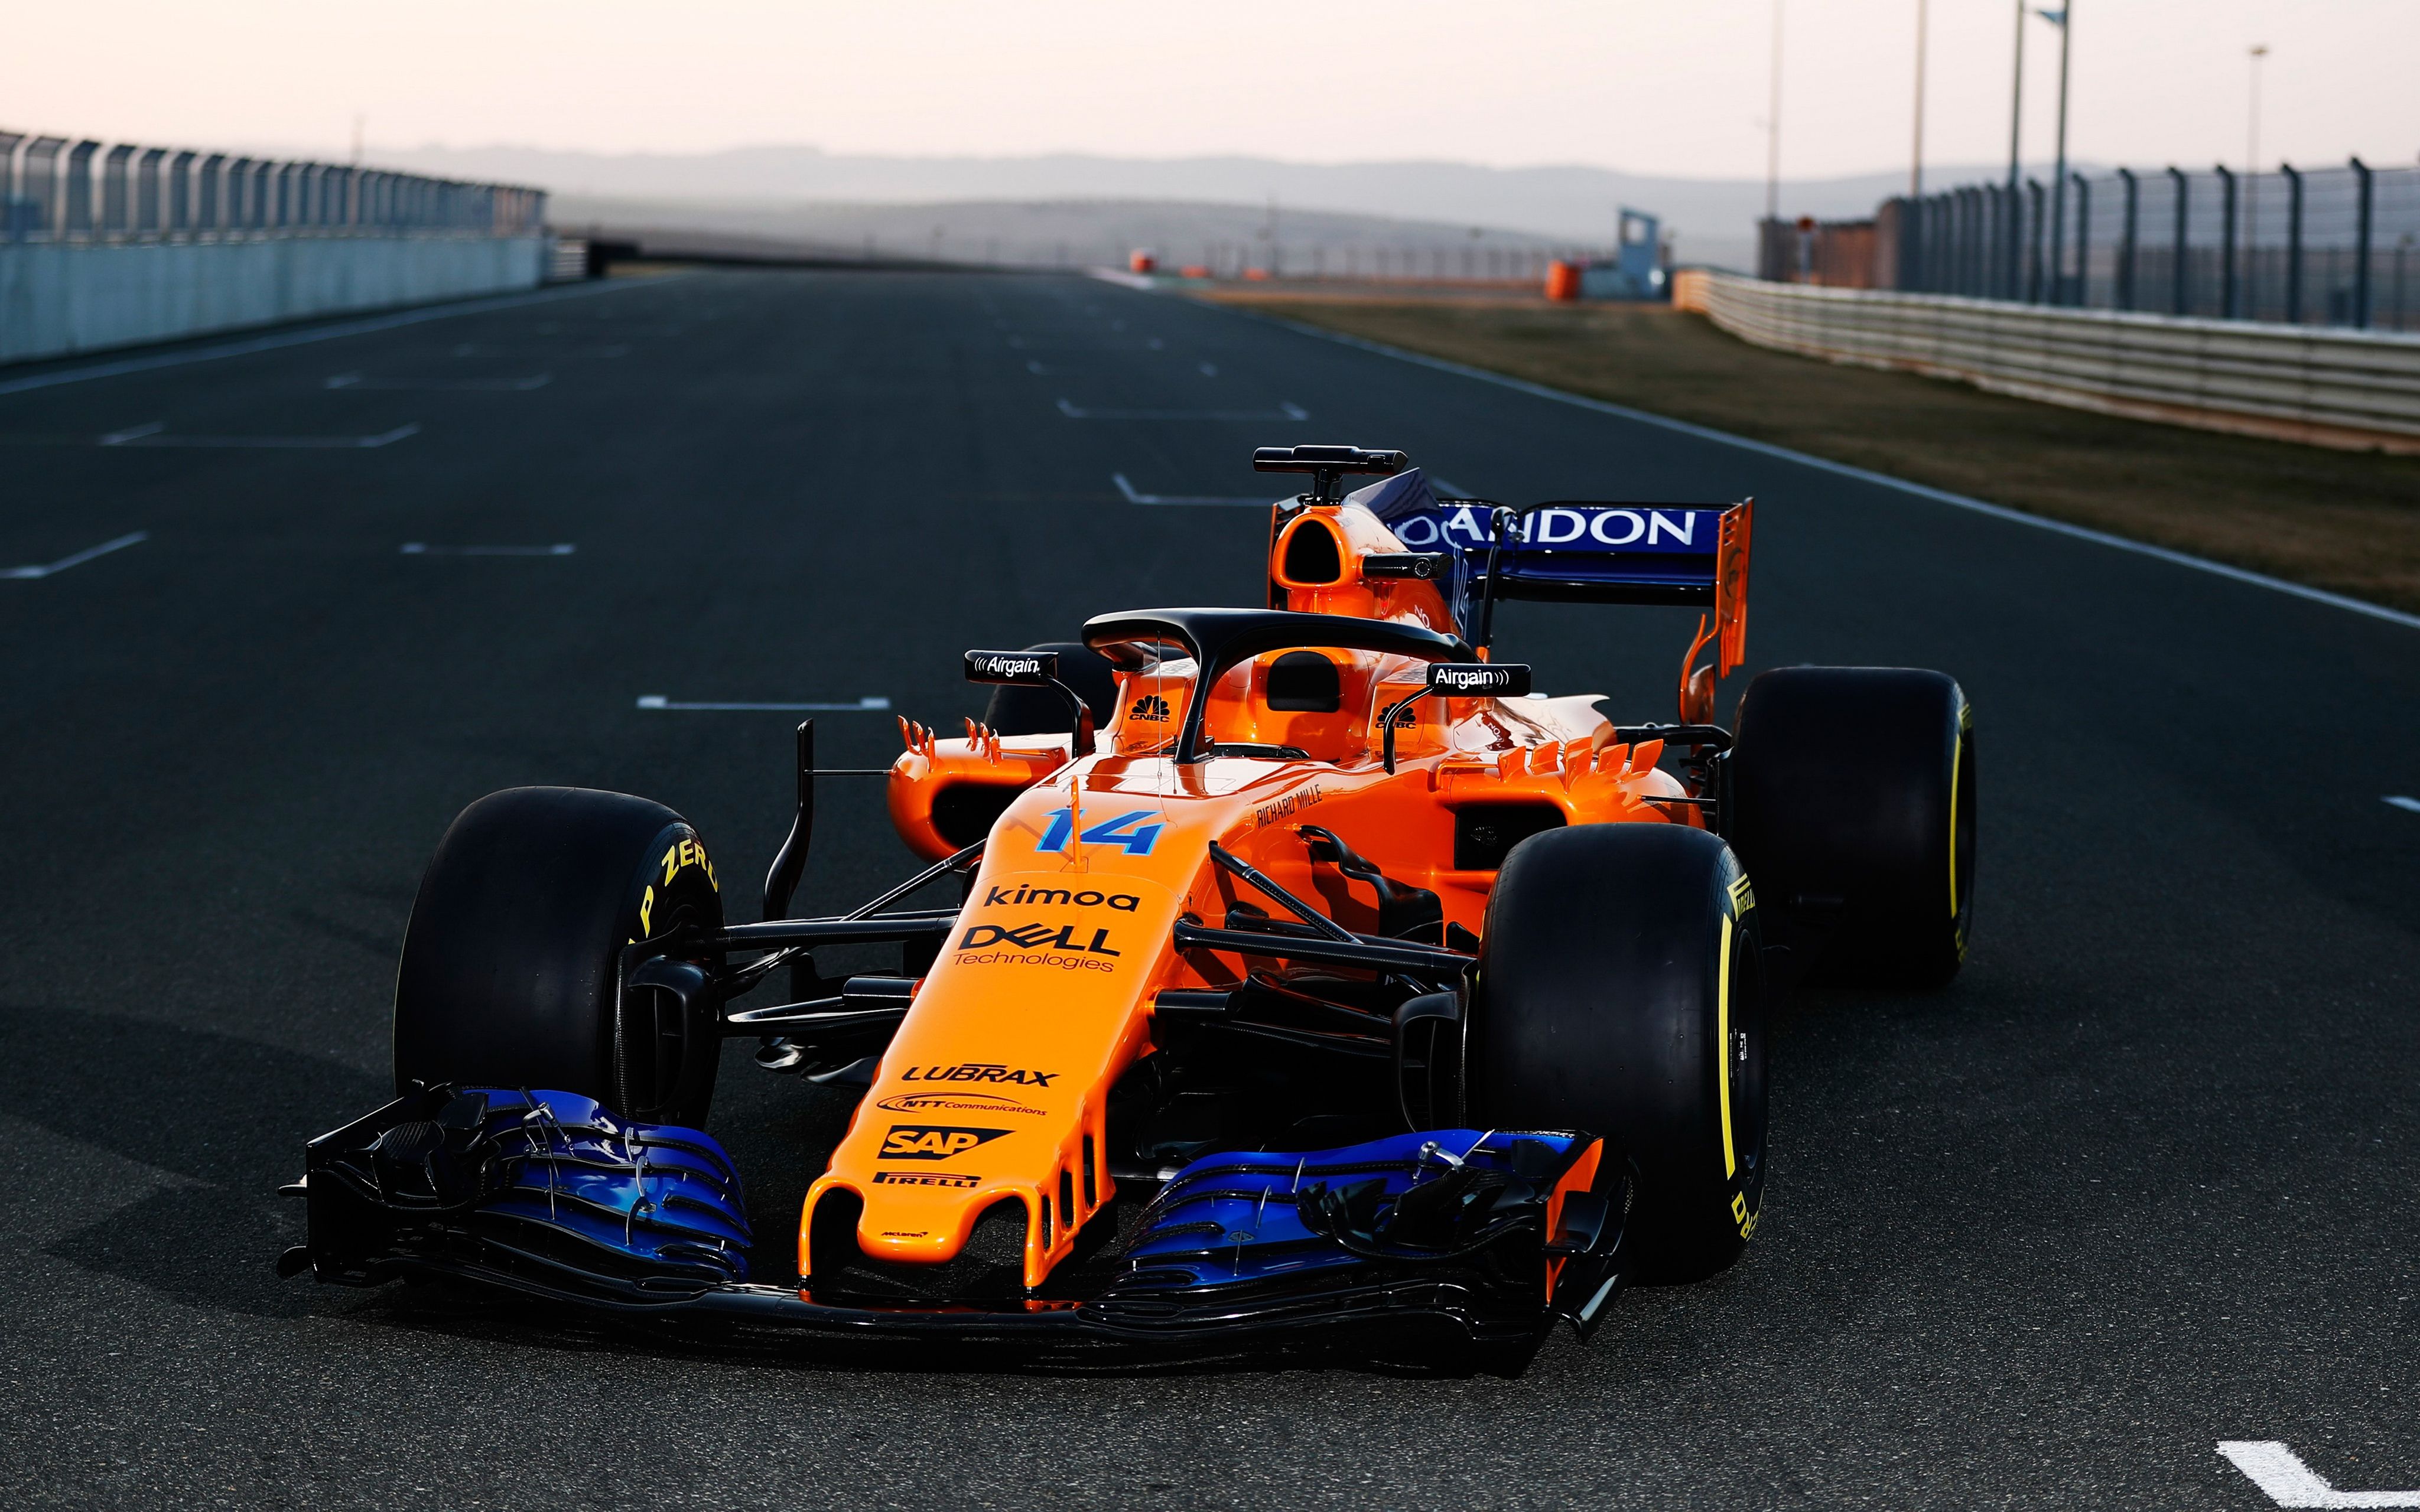 McLaren Formula 1 Wallpaper